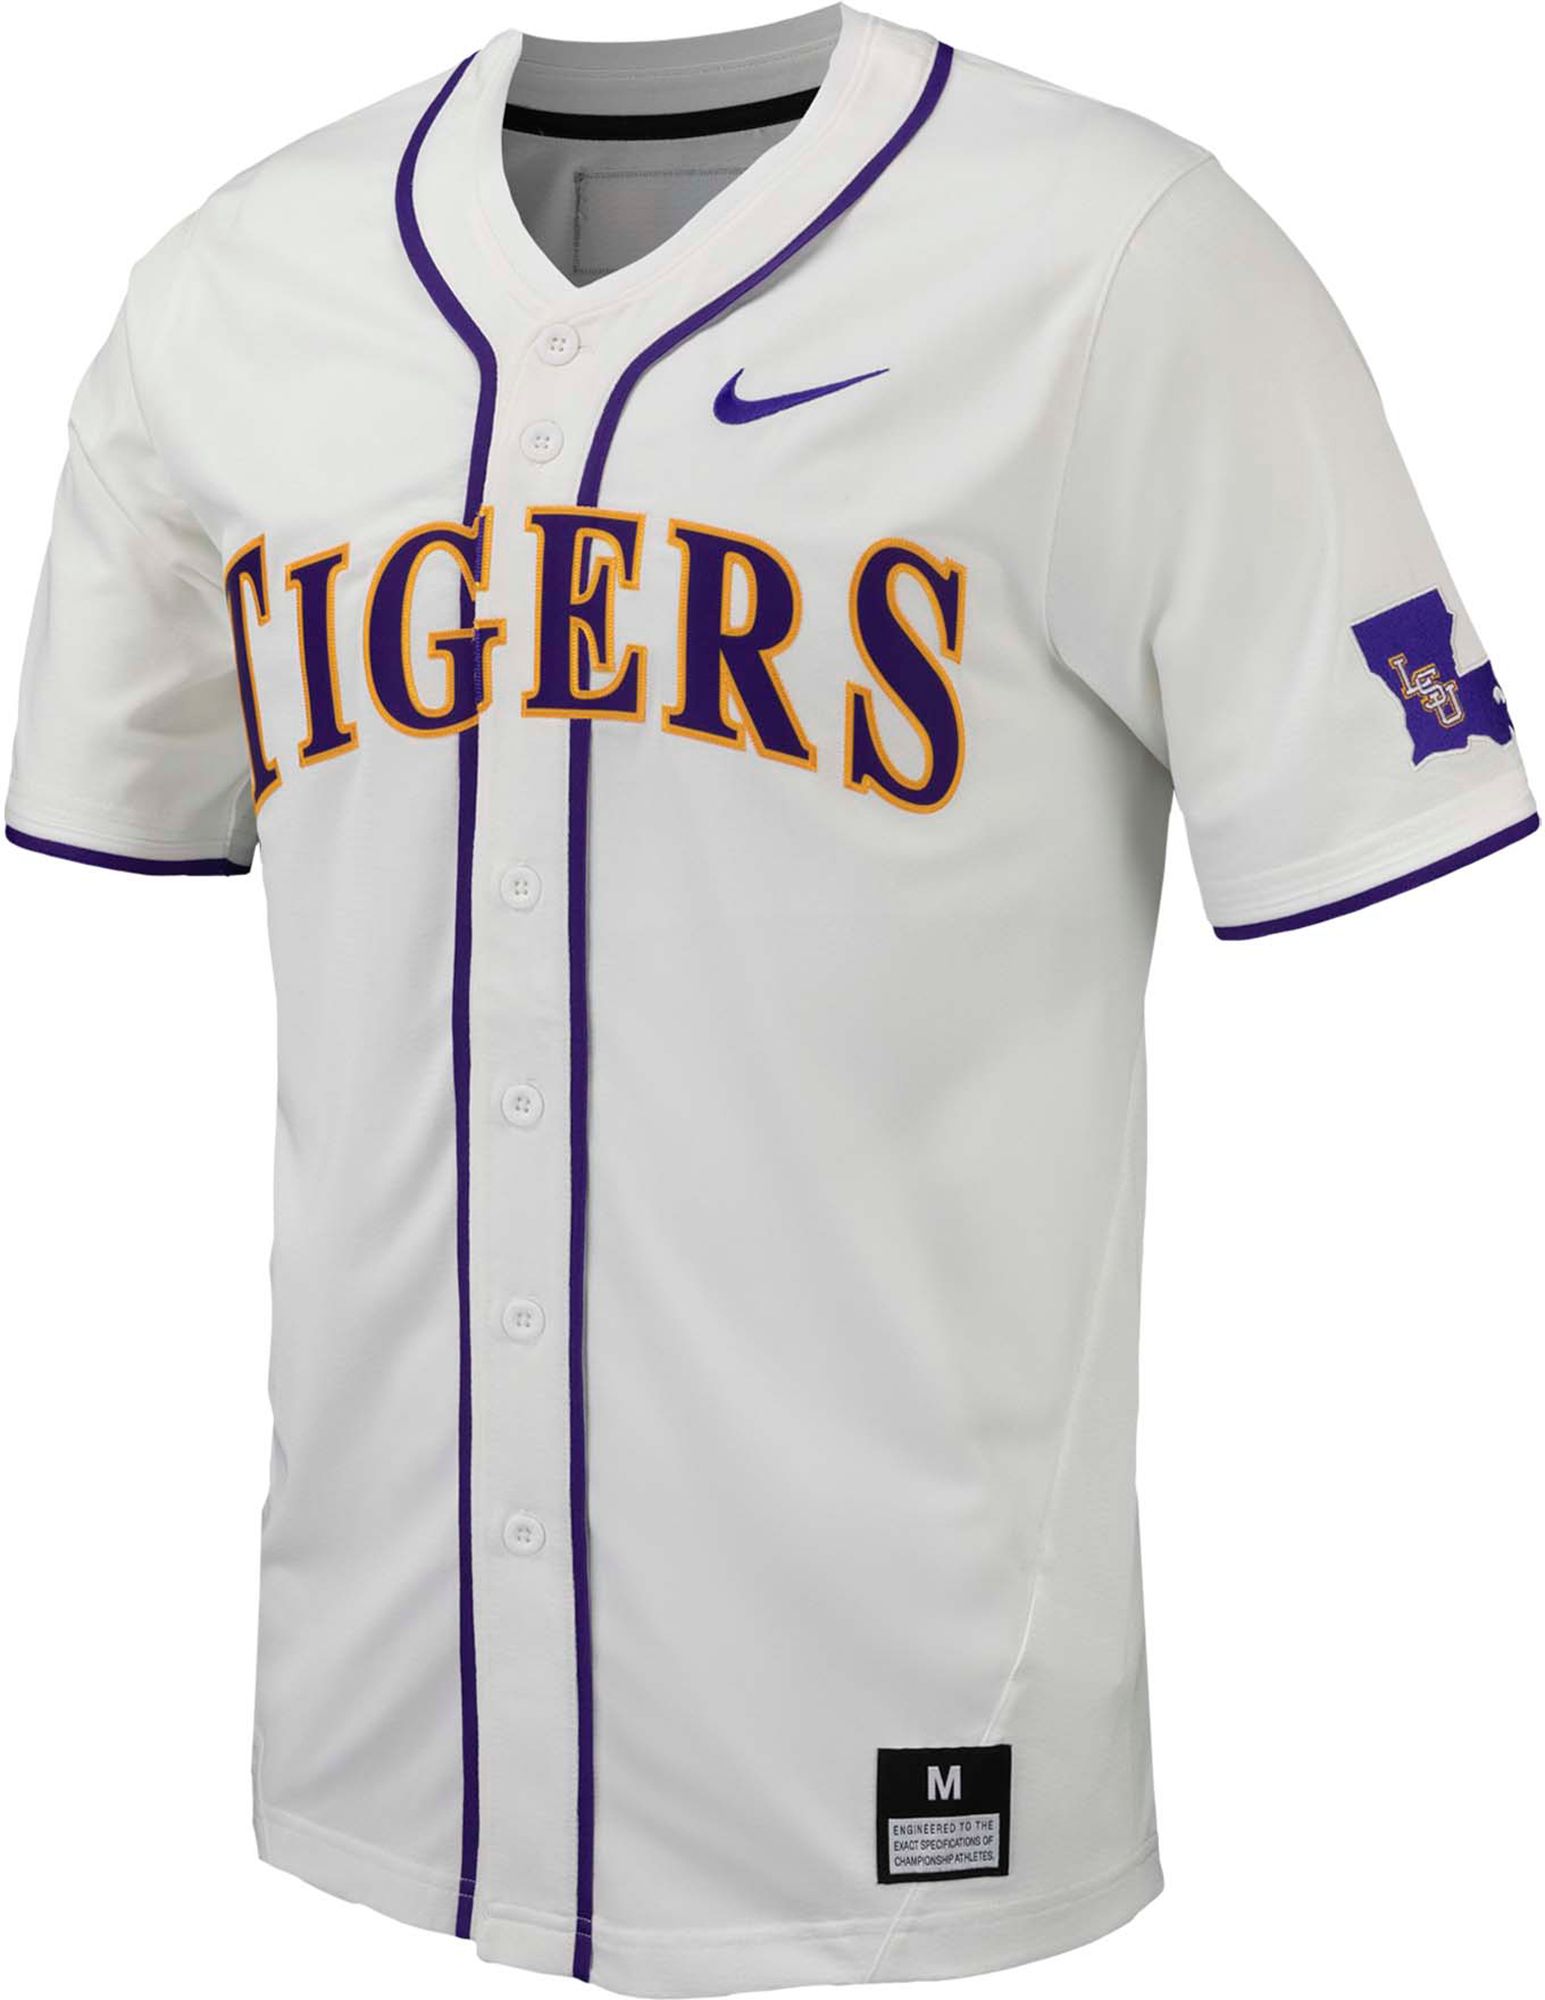 Nike Men's LSU Tigers Whtie Full Button Replica Baseball Jersey